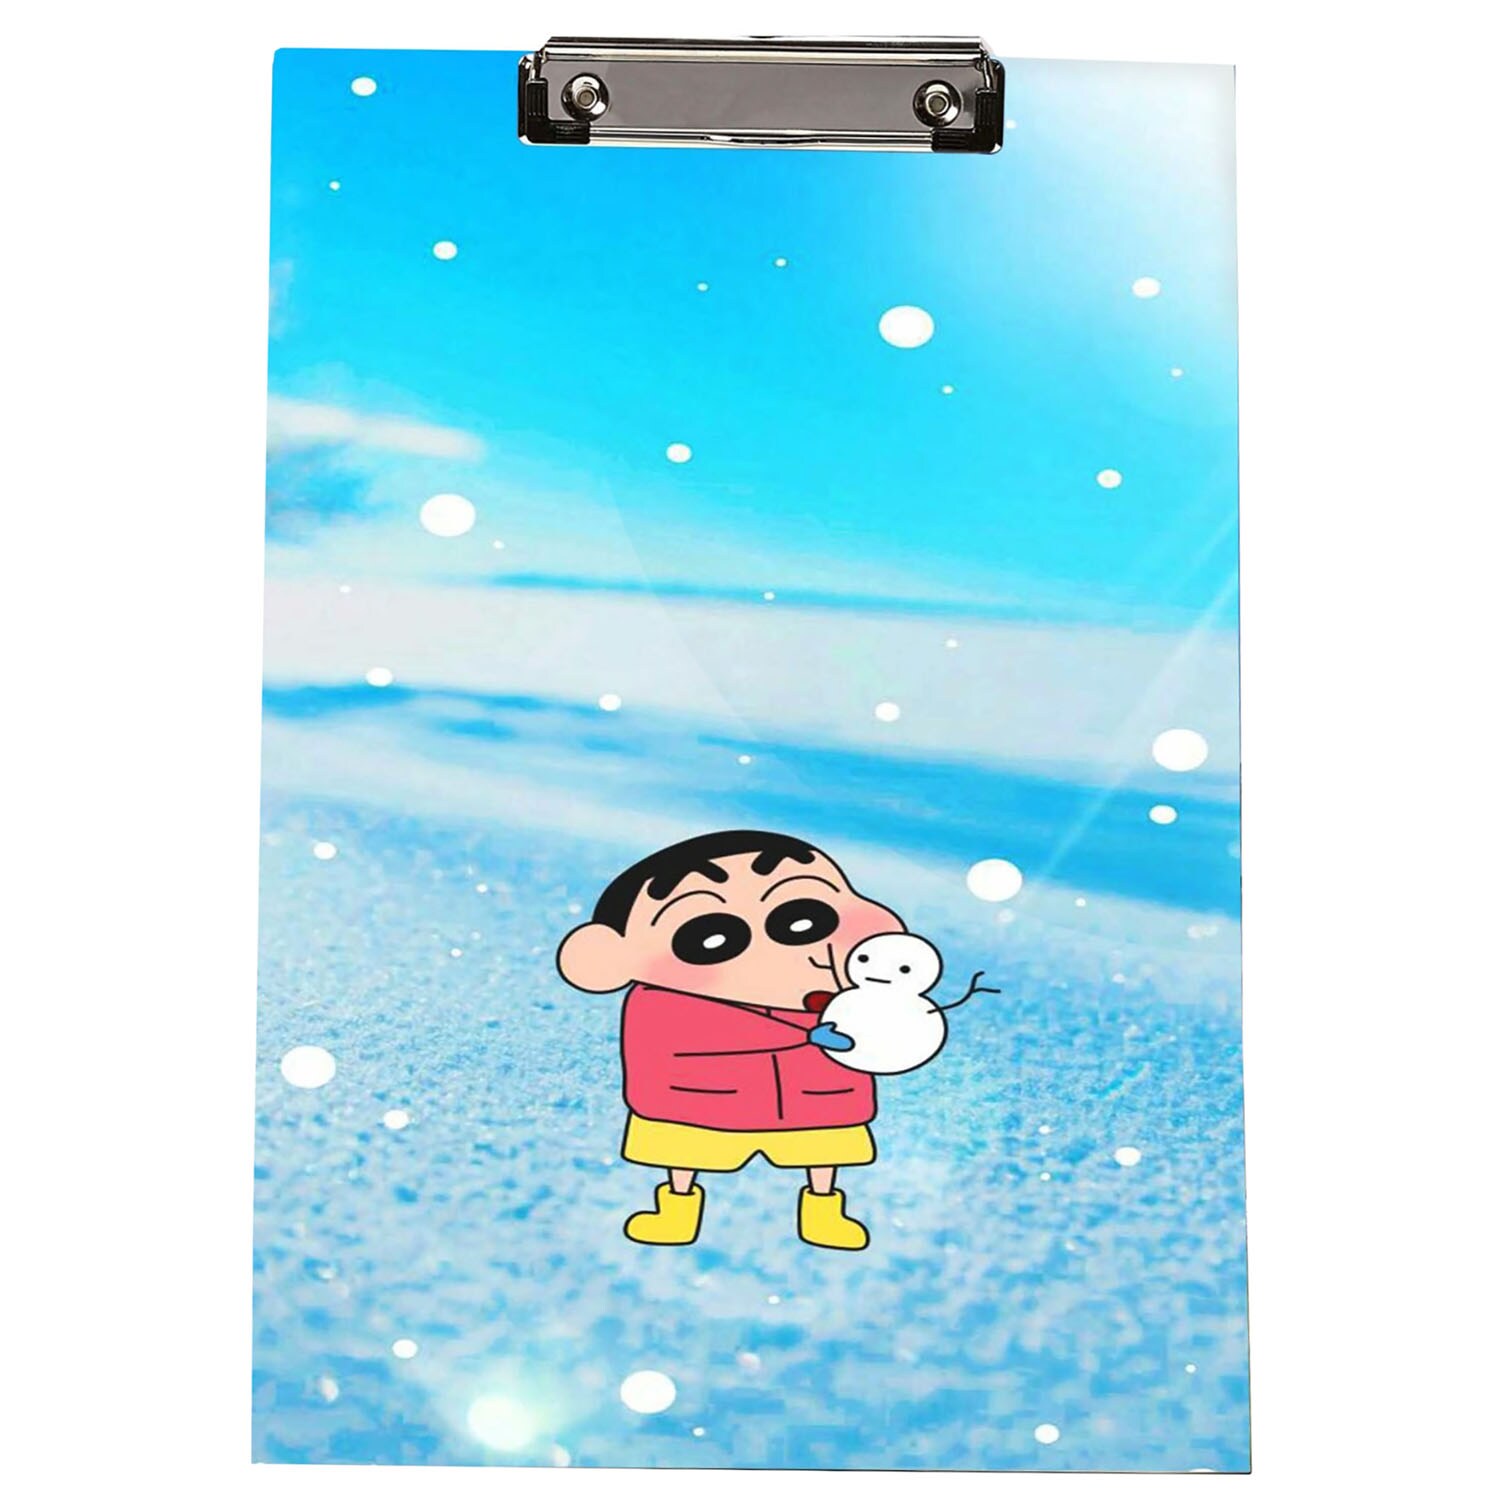 Creative Print Solution Shinchan Printed Clip Board, 14x10 Inches, Multicolour